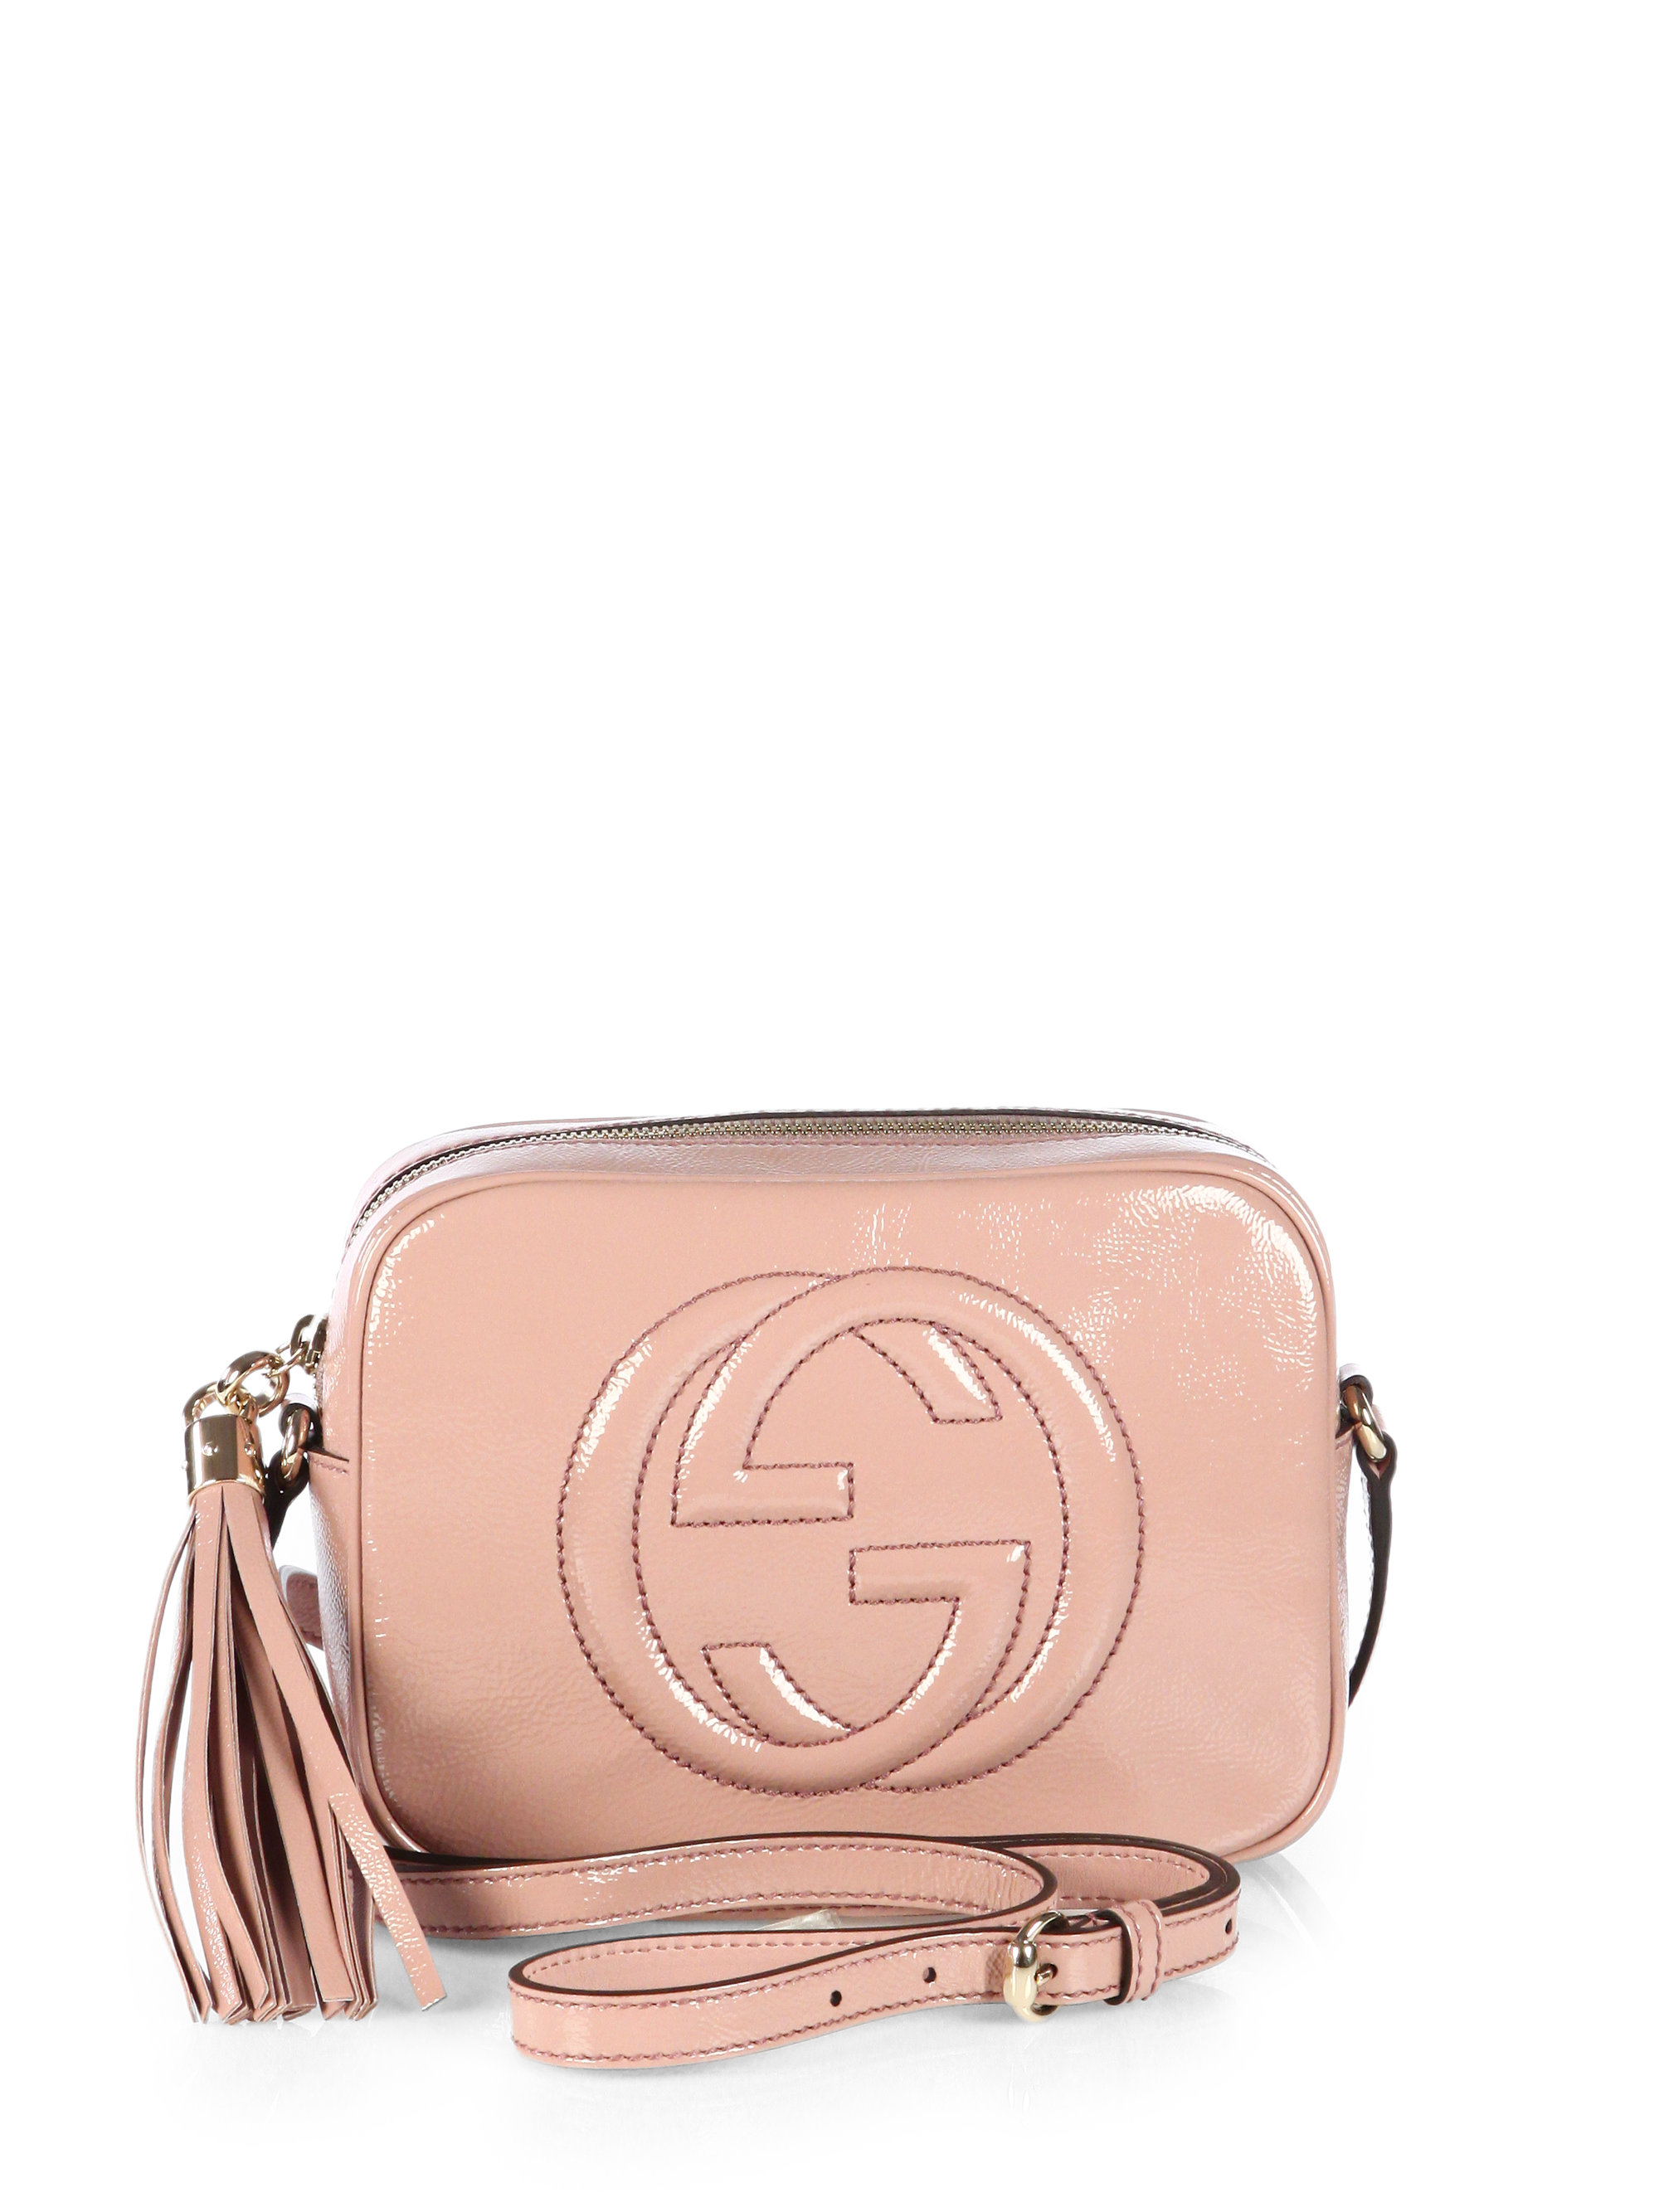 Gucci Soho Disco Bag in (Pink) -